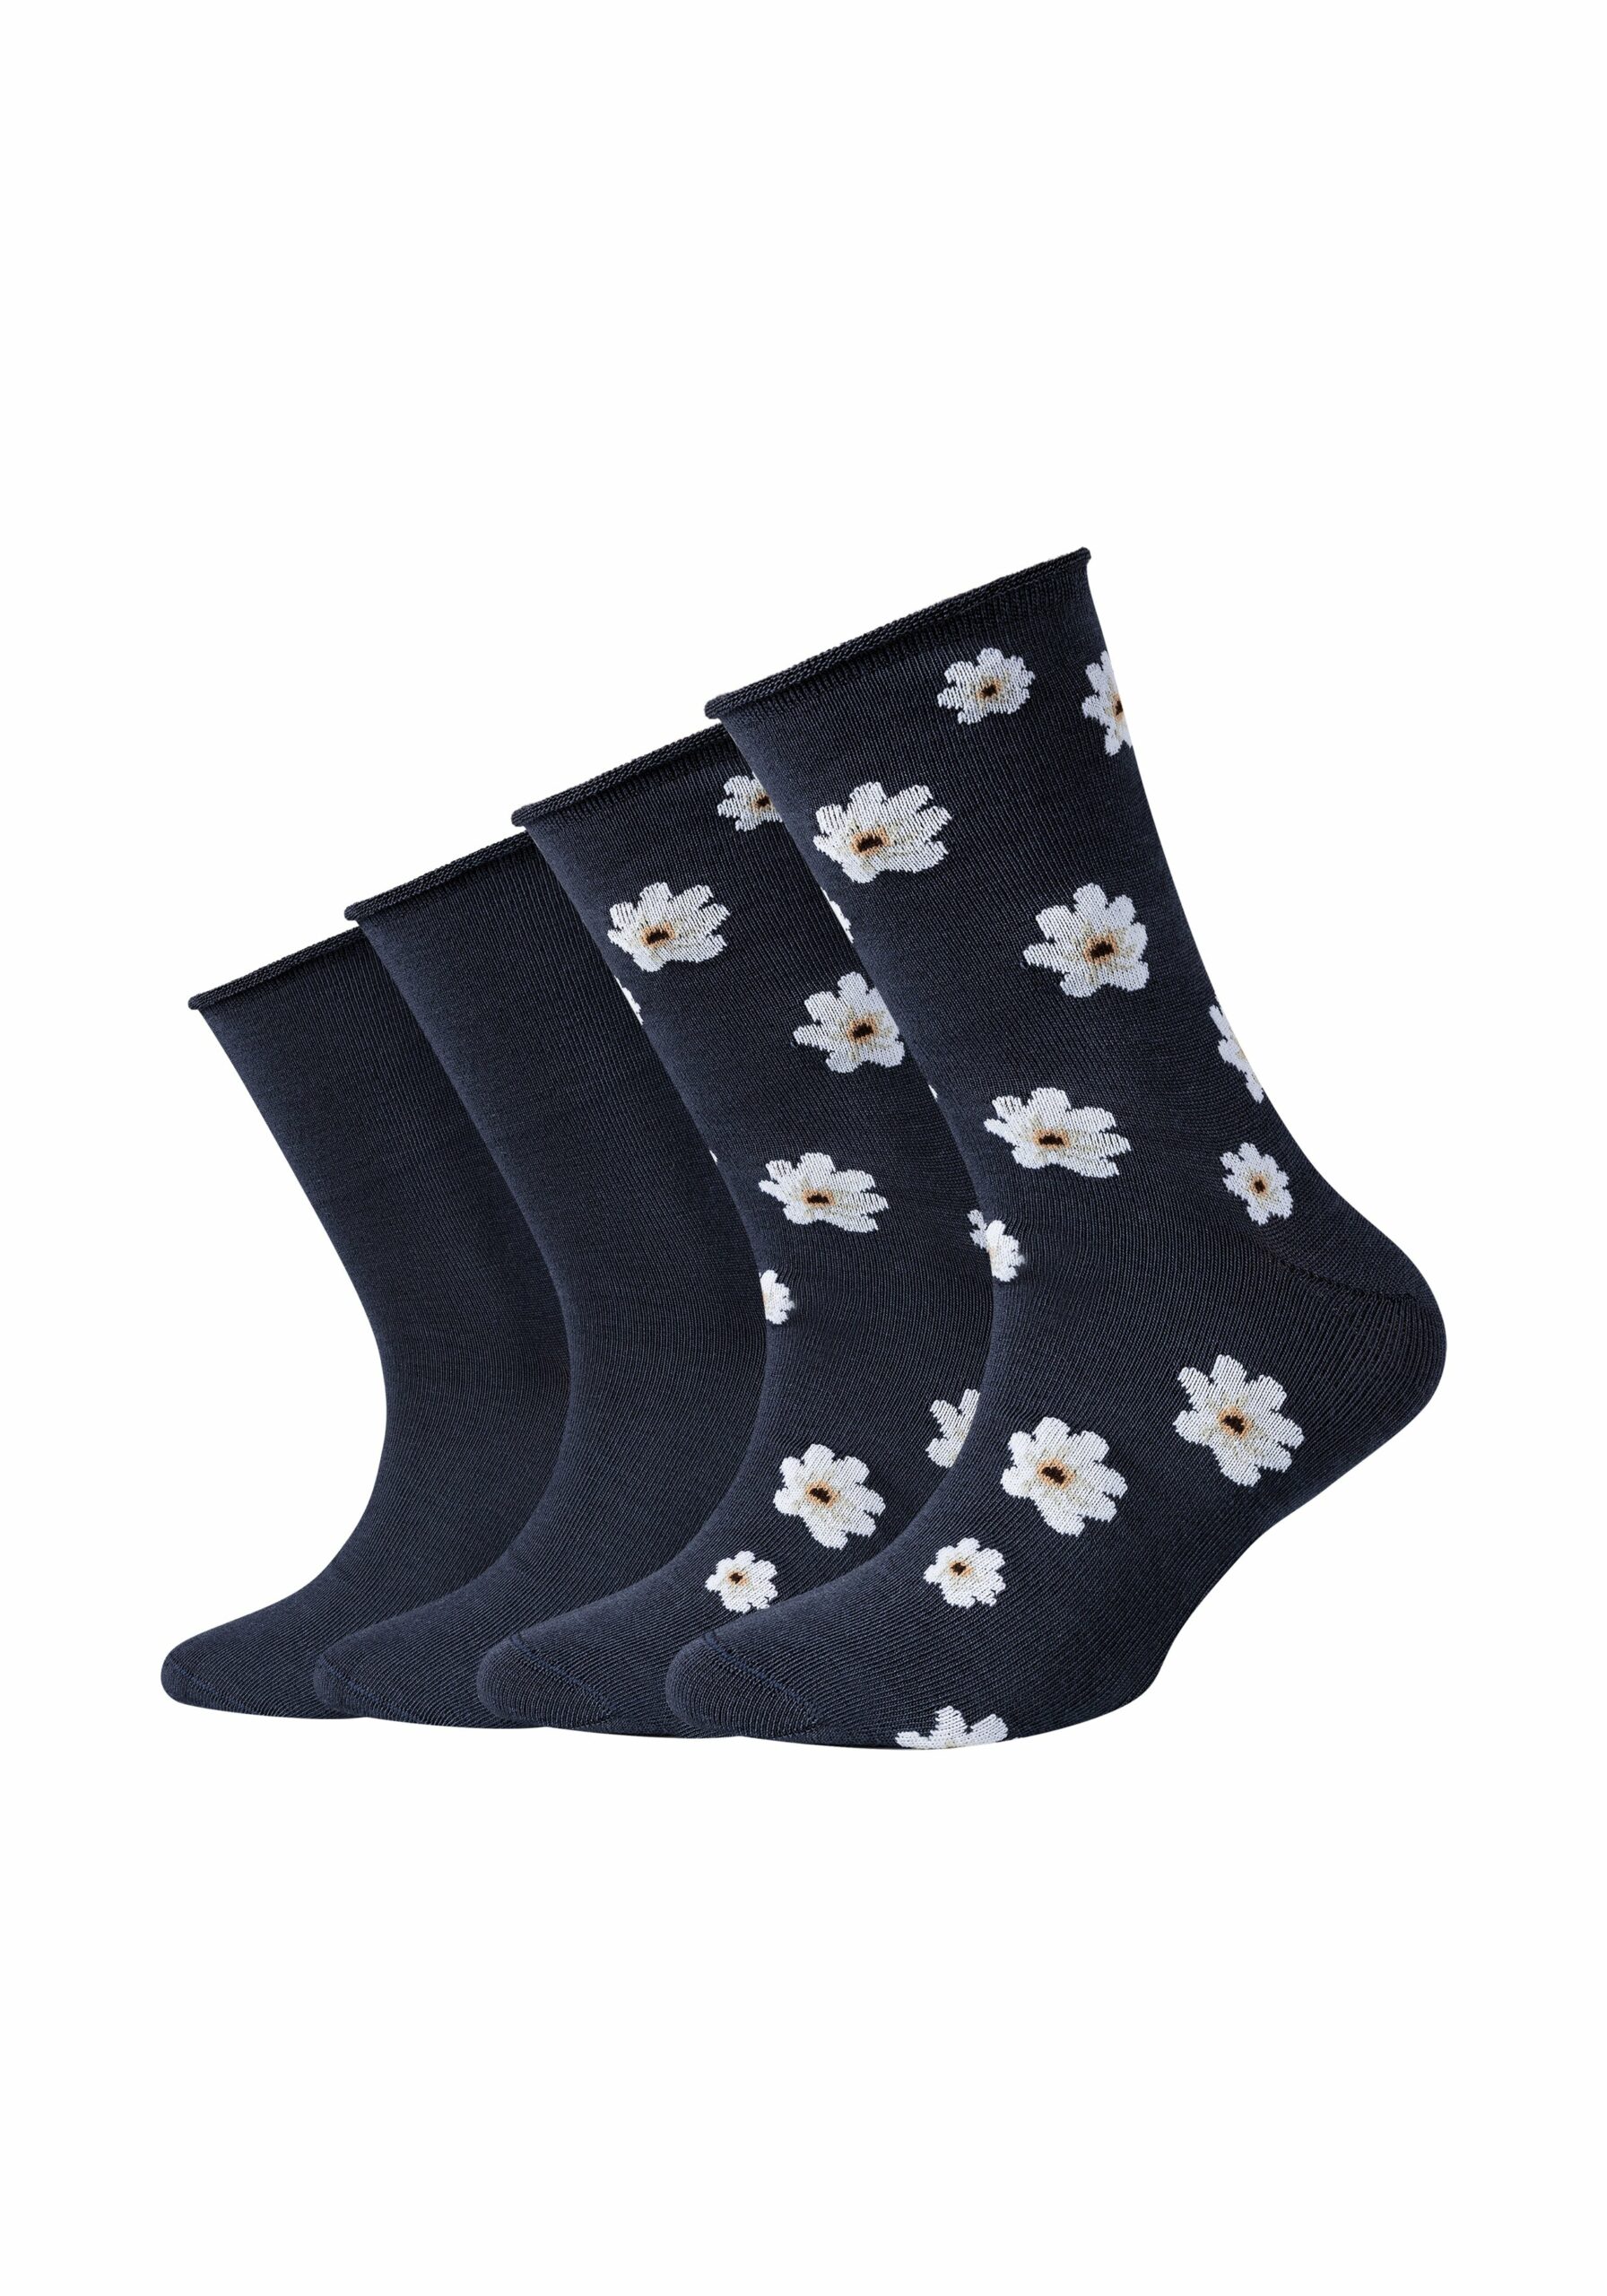 Kinder Flower Pack kaufen 4er Touch s.Oliver blue Socken bei Silky